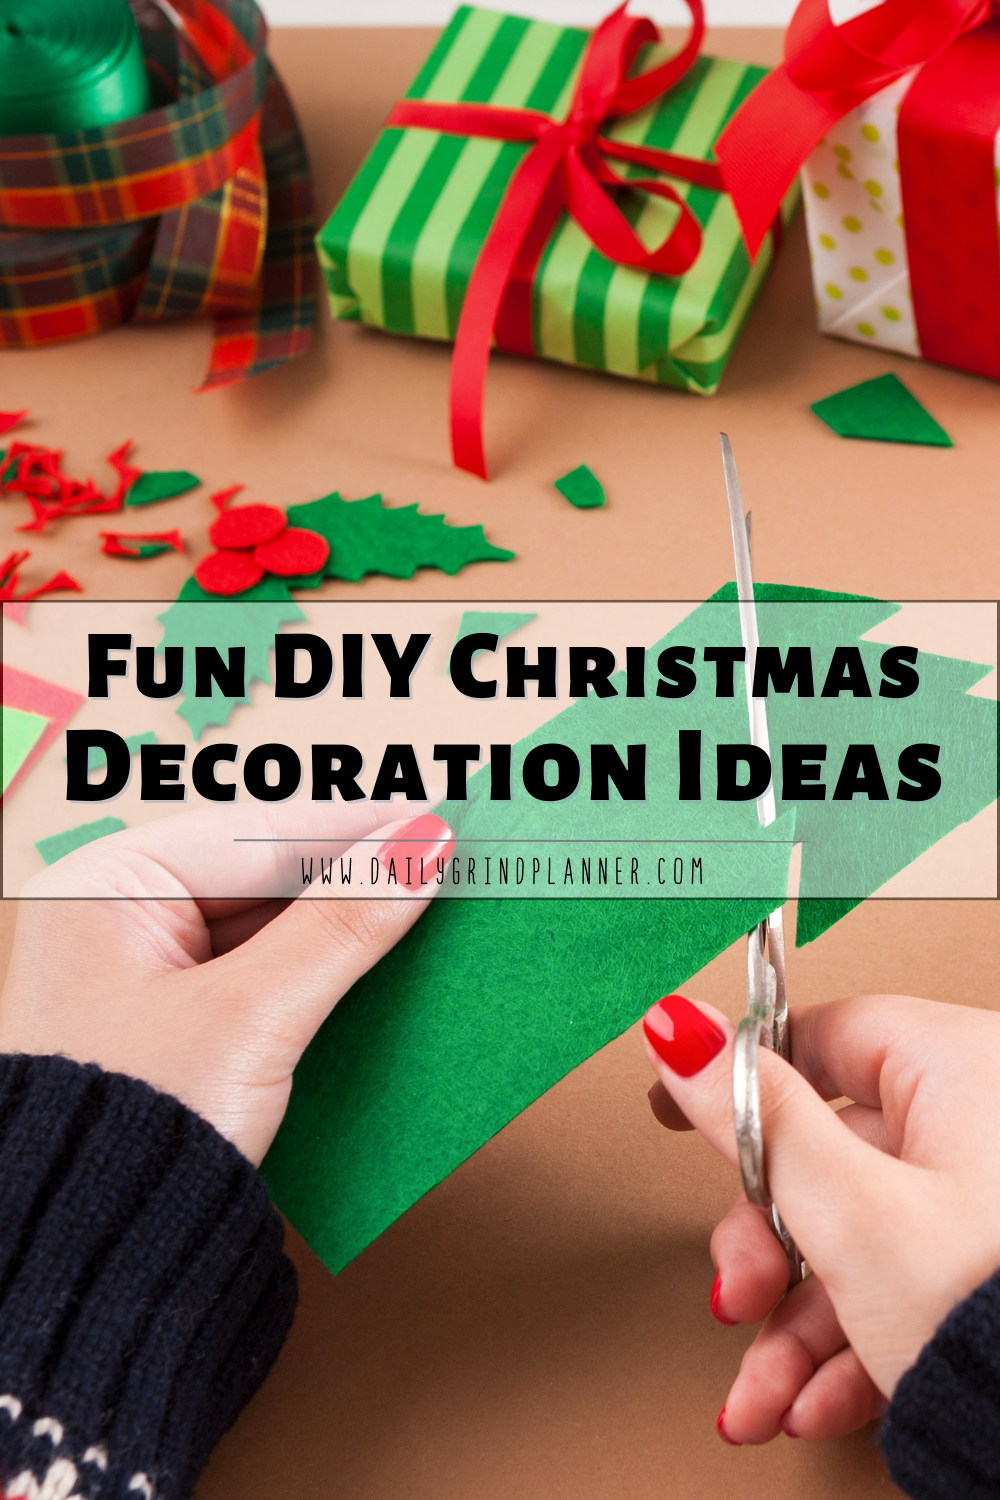 Fun DIY Christmas Decoration Ideas